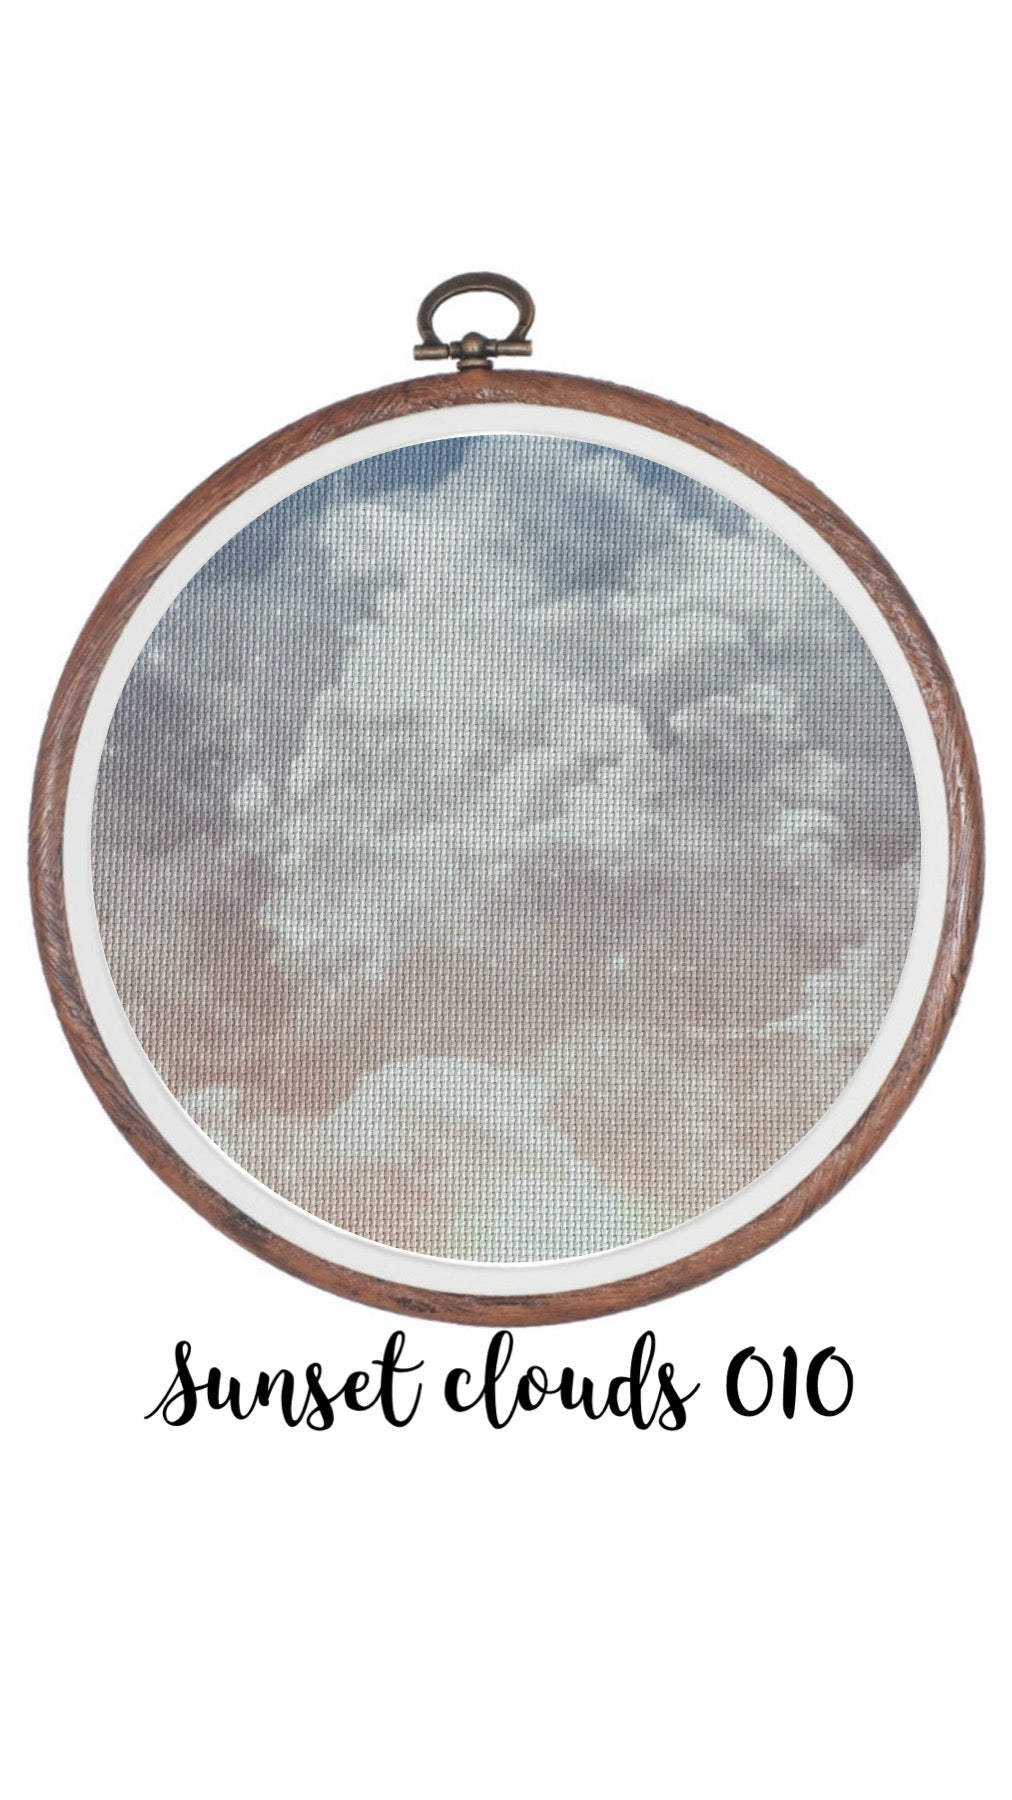 Sunset Clouds 010 Aida Cloth || Hand Dyed Effect Aida Canvas || Cross Stitching